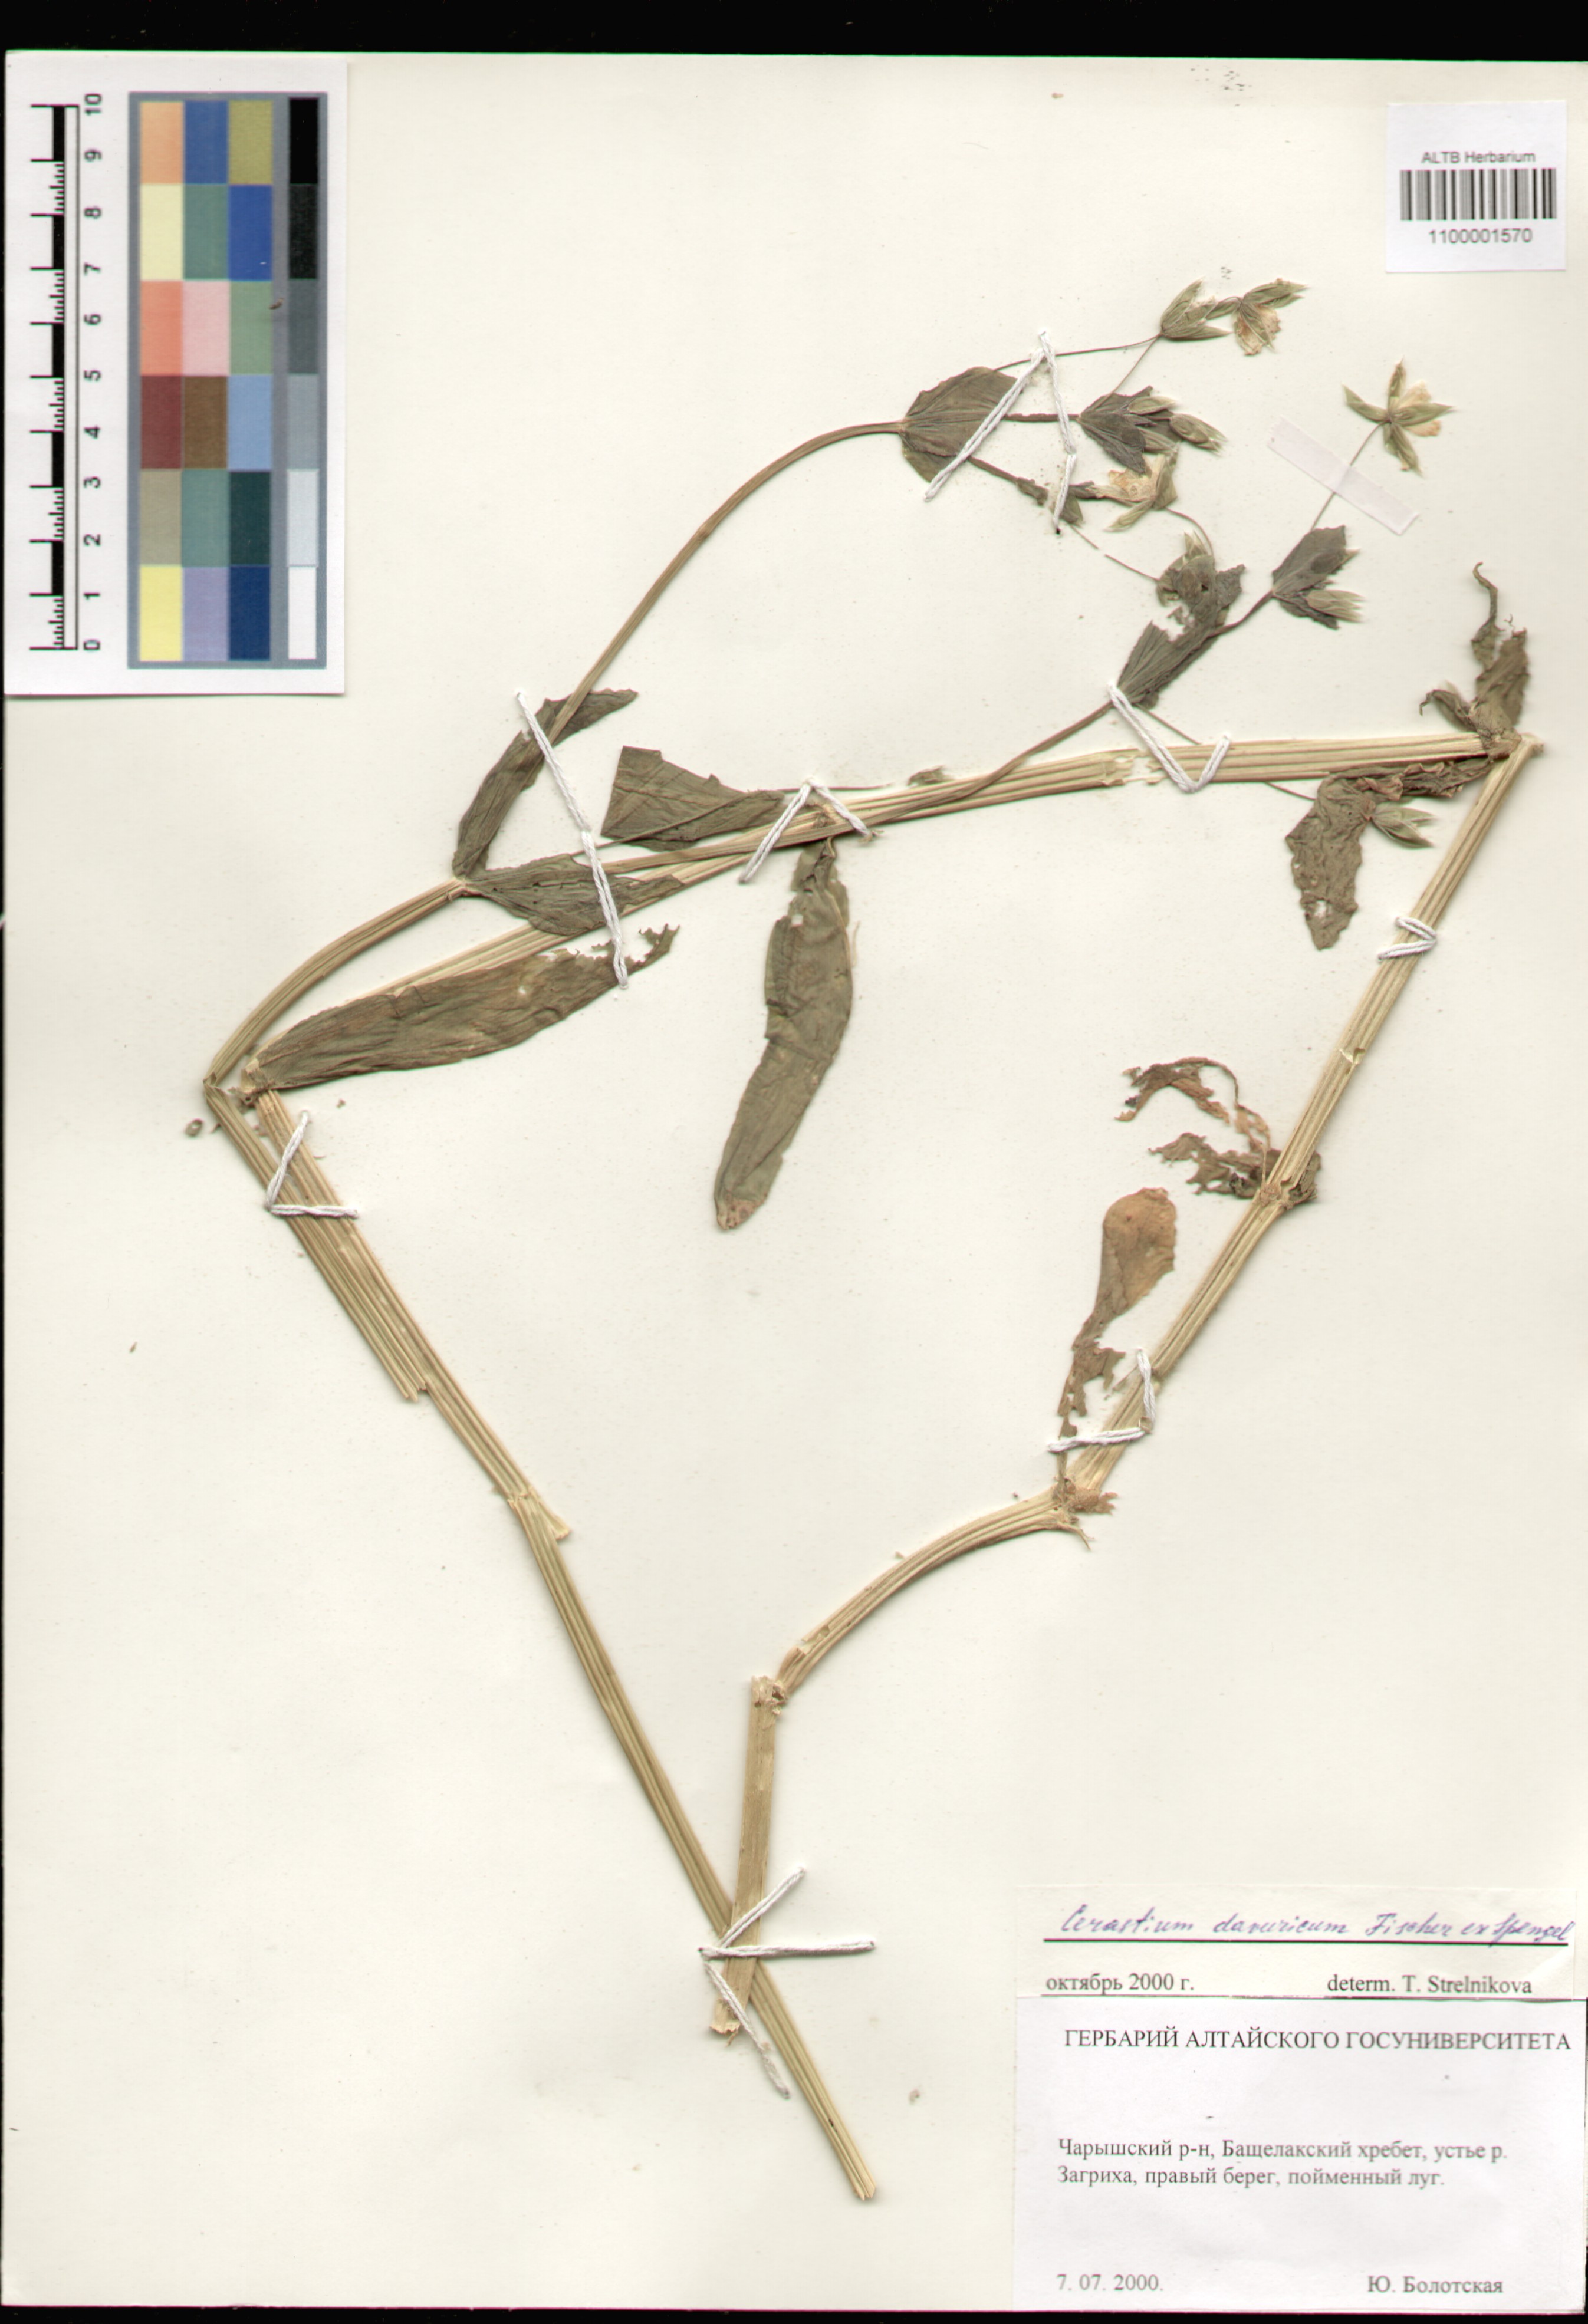 Caryophyllaceae,Cerastium davuricum Fisch. ex Spreng.